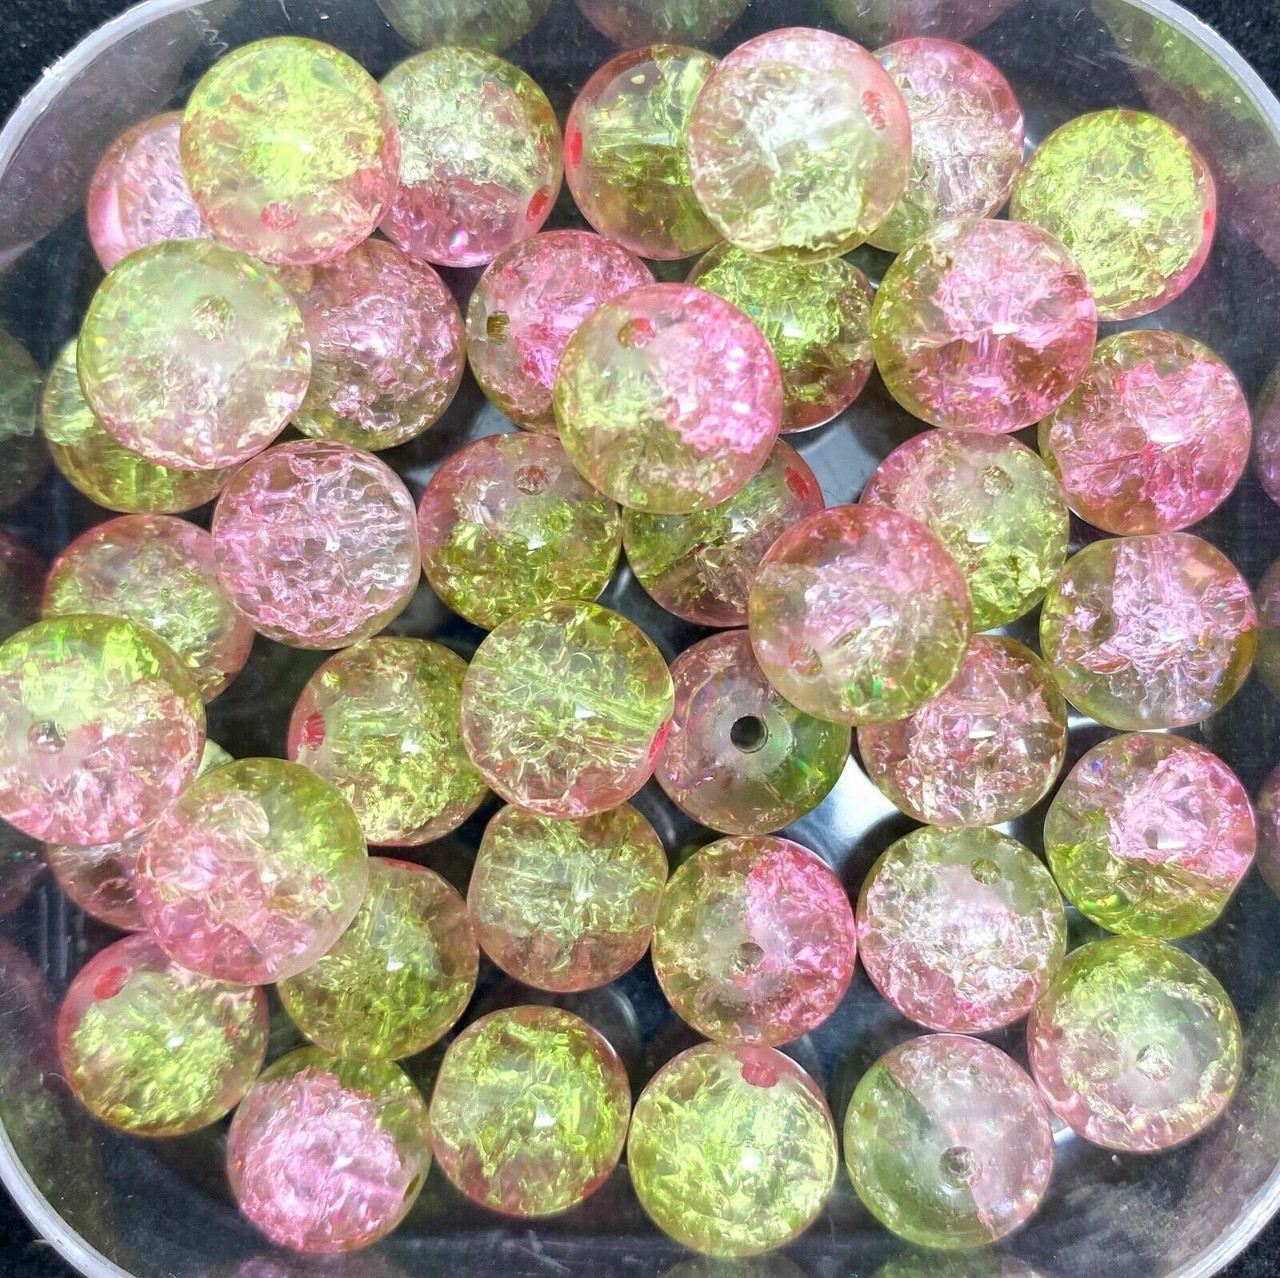 8mm Crackle Glass Beads - Pink & Light Green, 50 beads